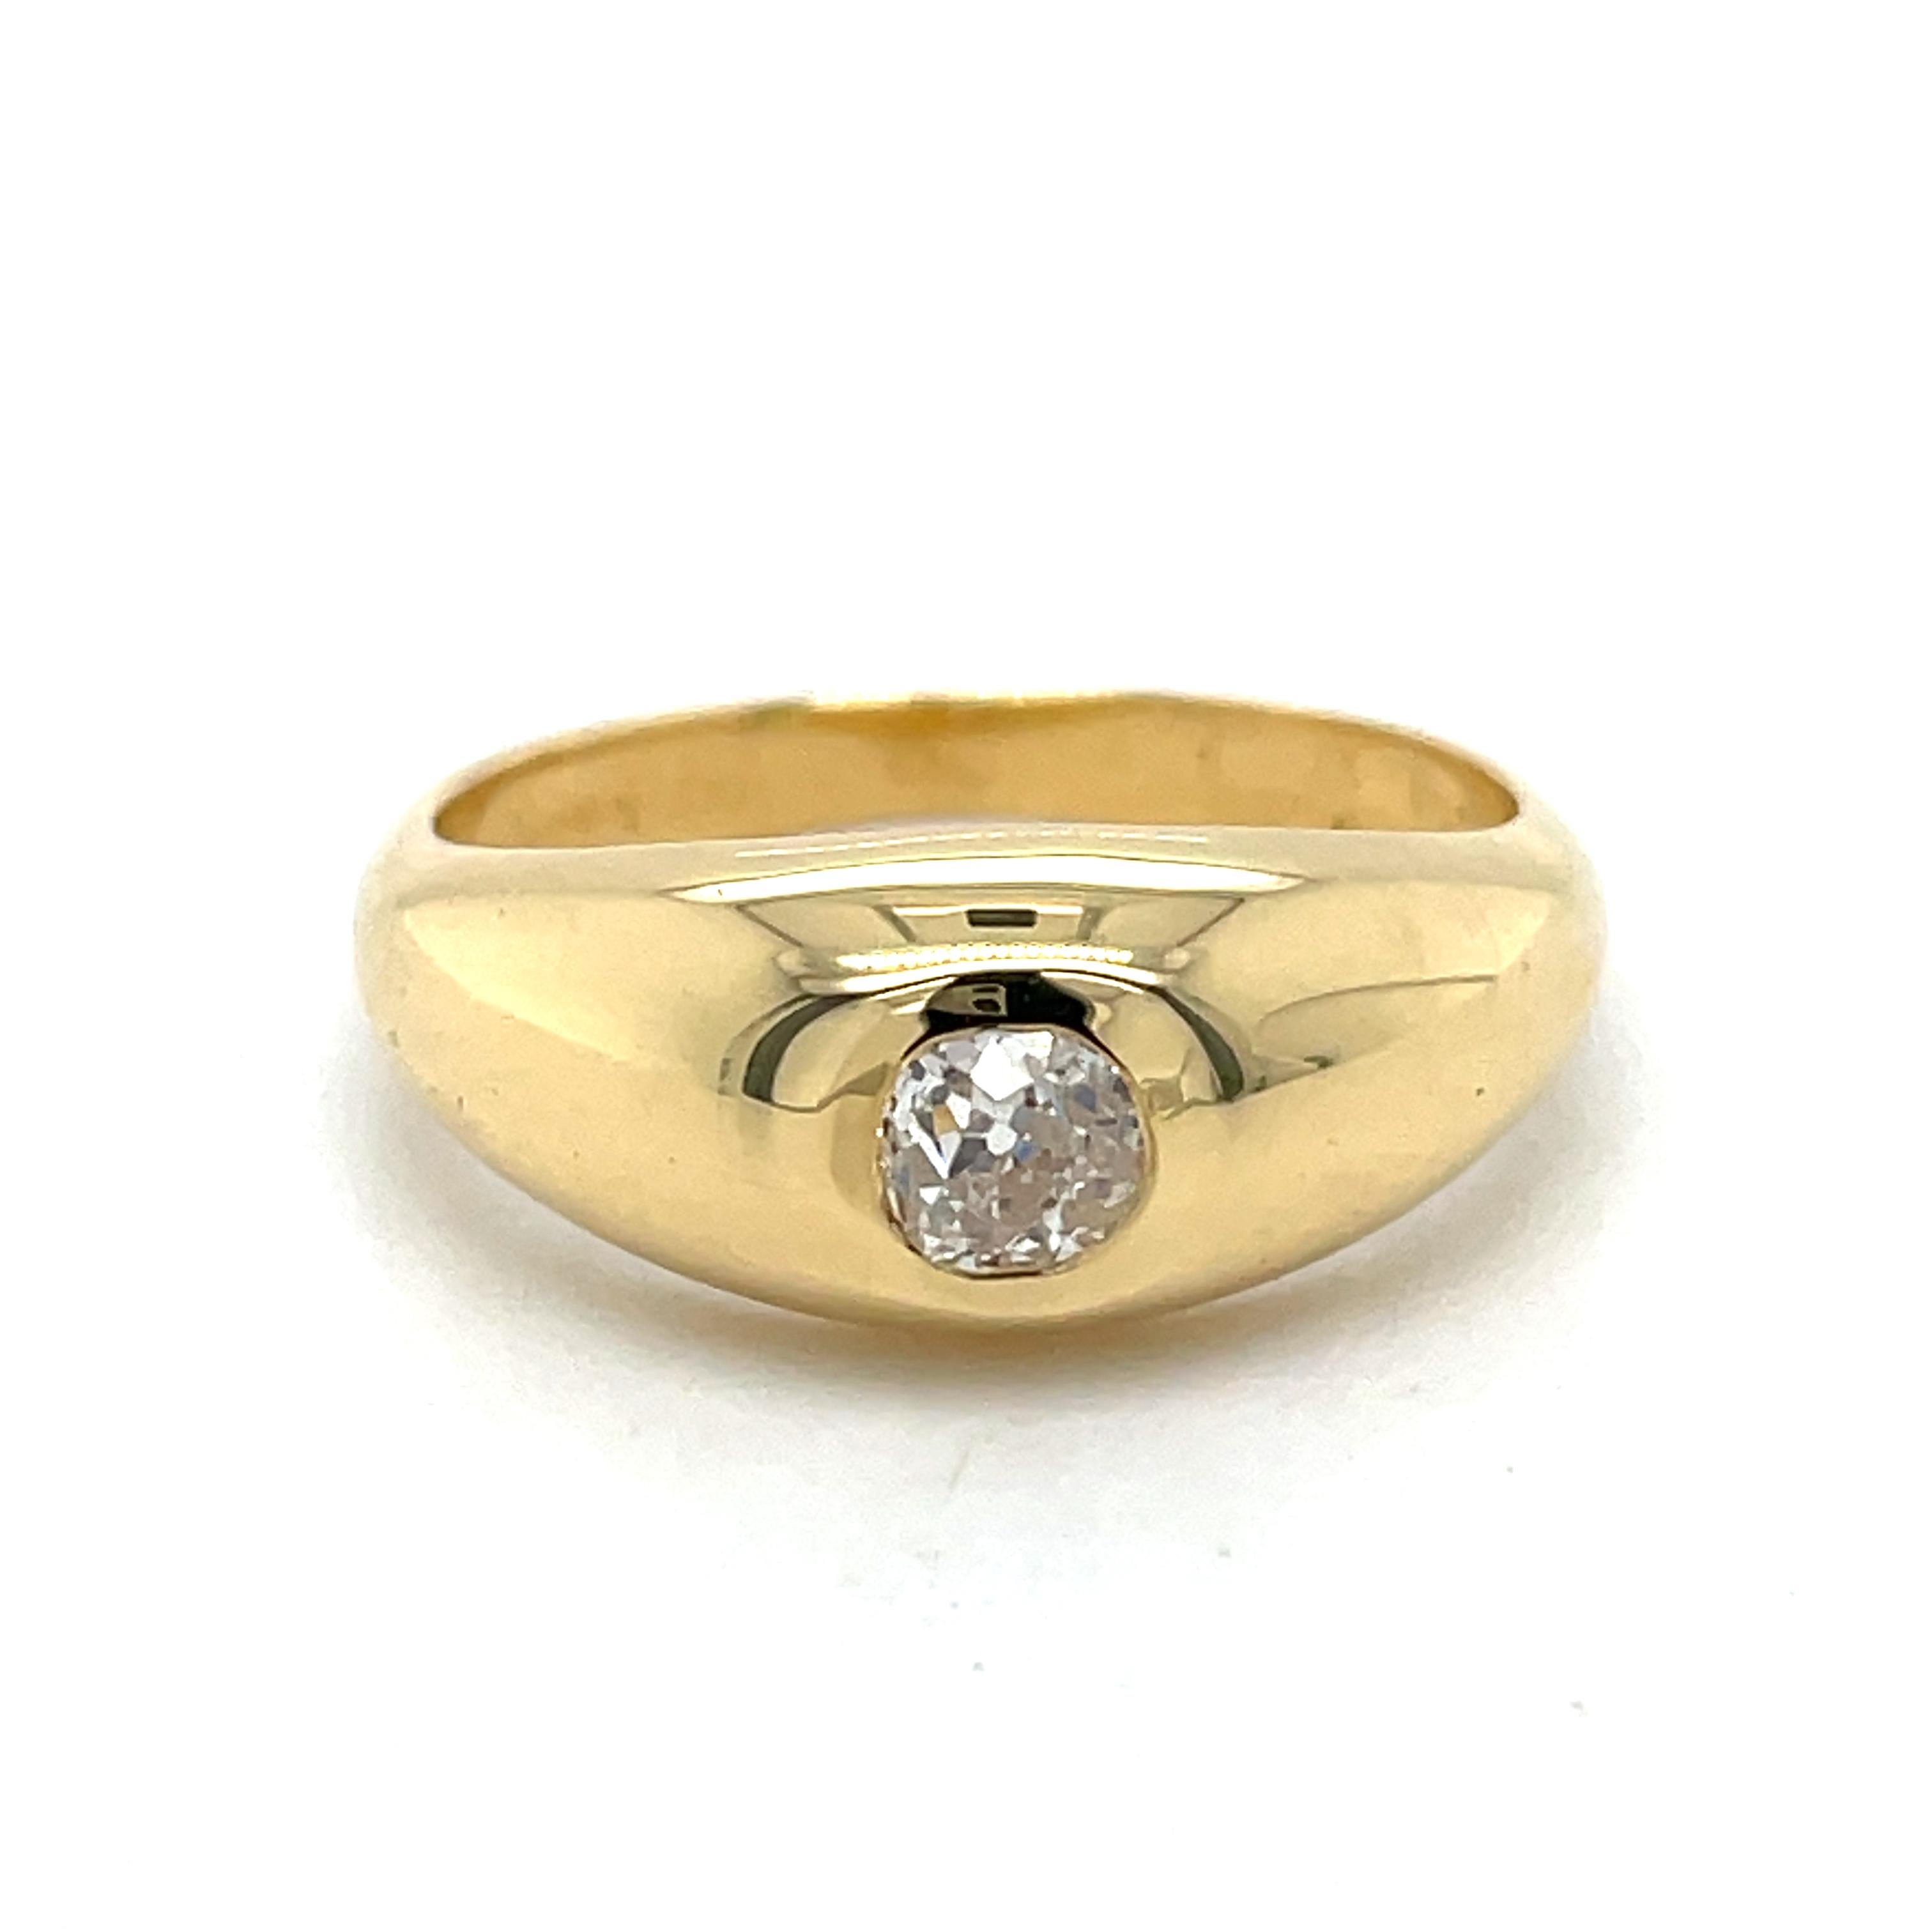 For Sale:  Dome Gold ring, Bezel set, 0.3CT Old Mine Diamond, 18k Gold, vintage stayle ring 9